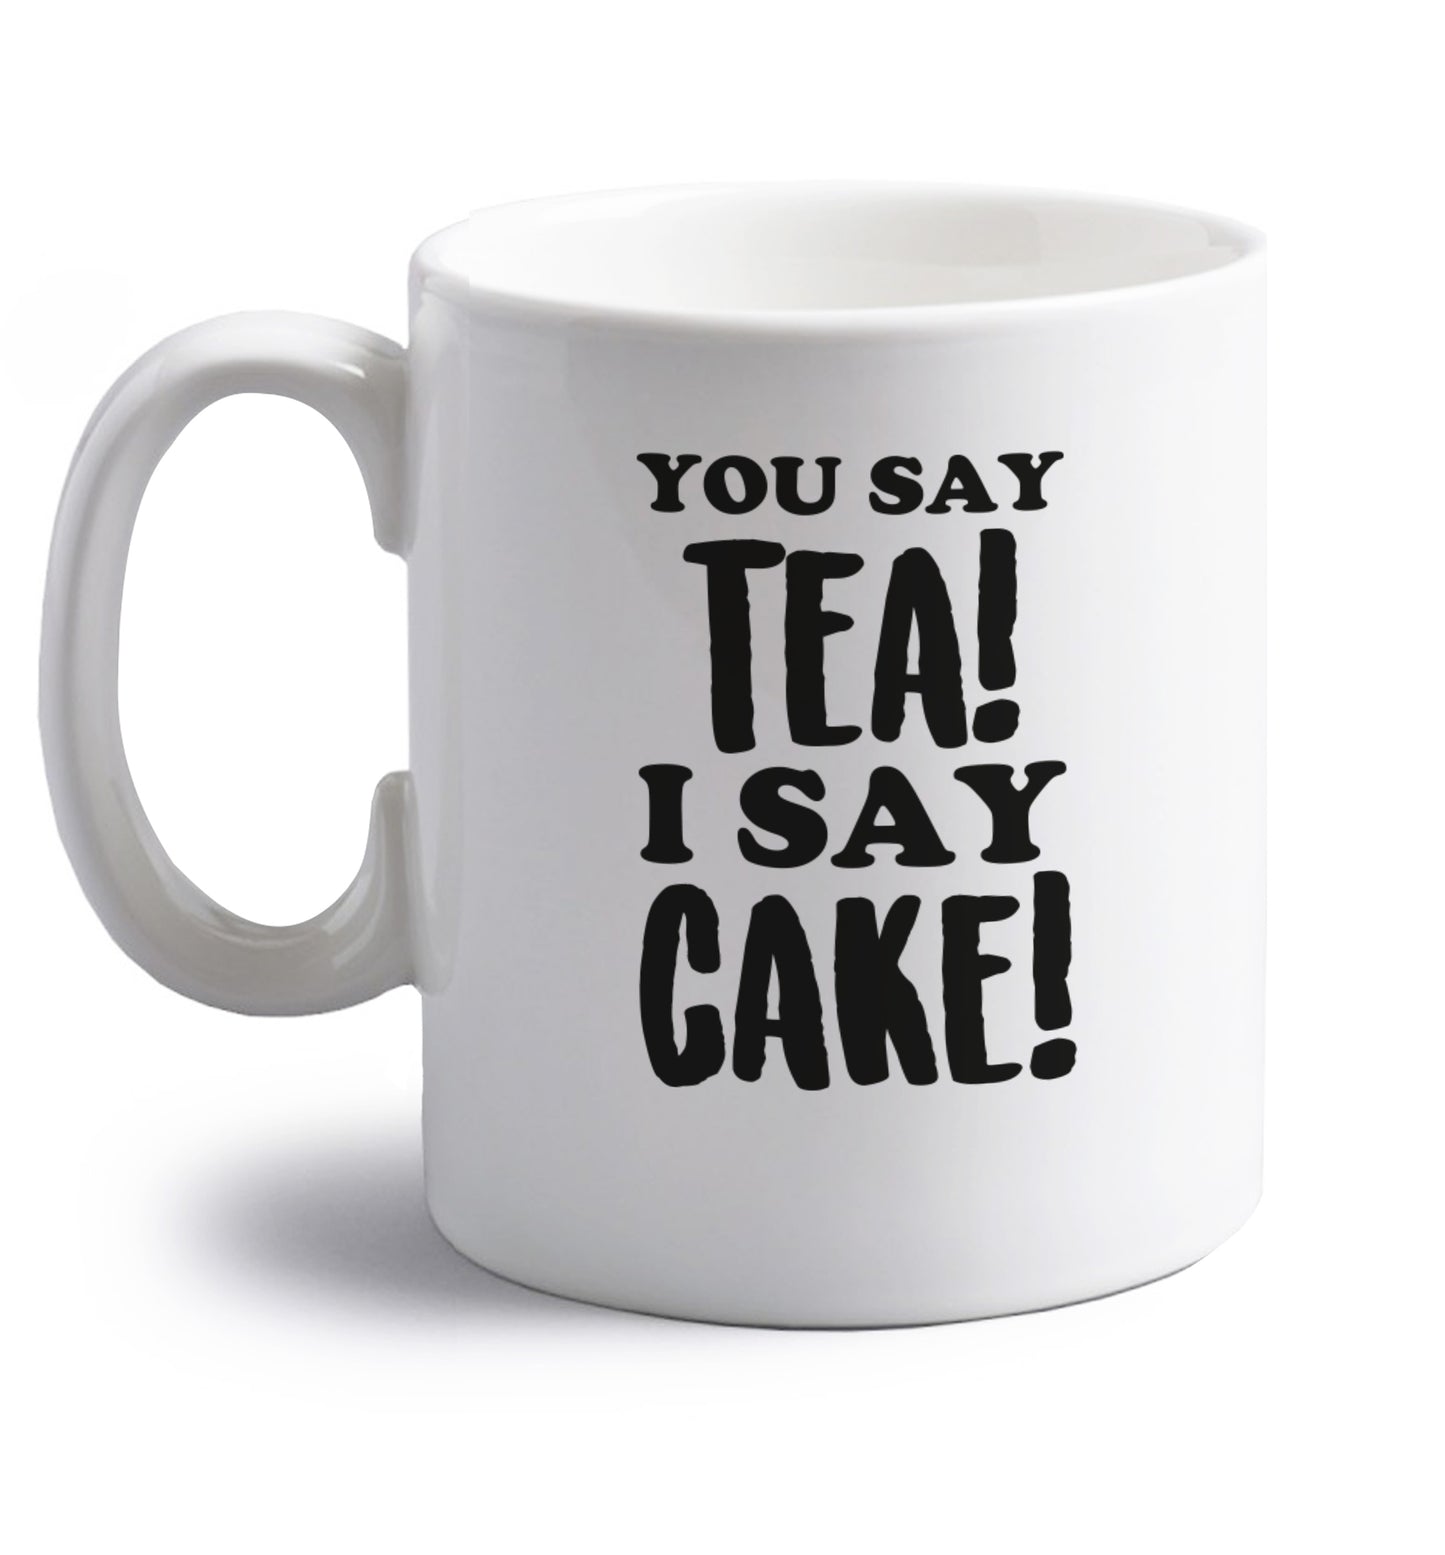 You say tea I say cake! right handed white ceramic mug 